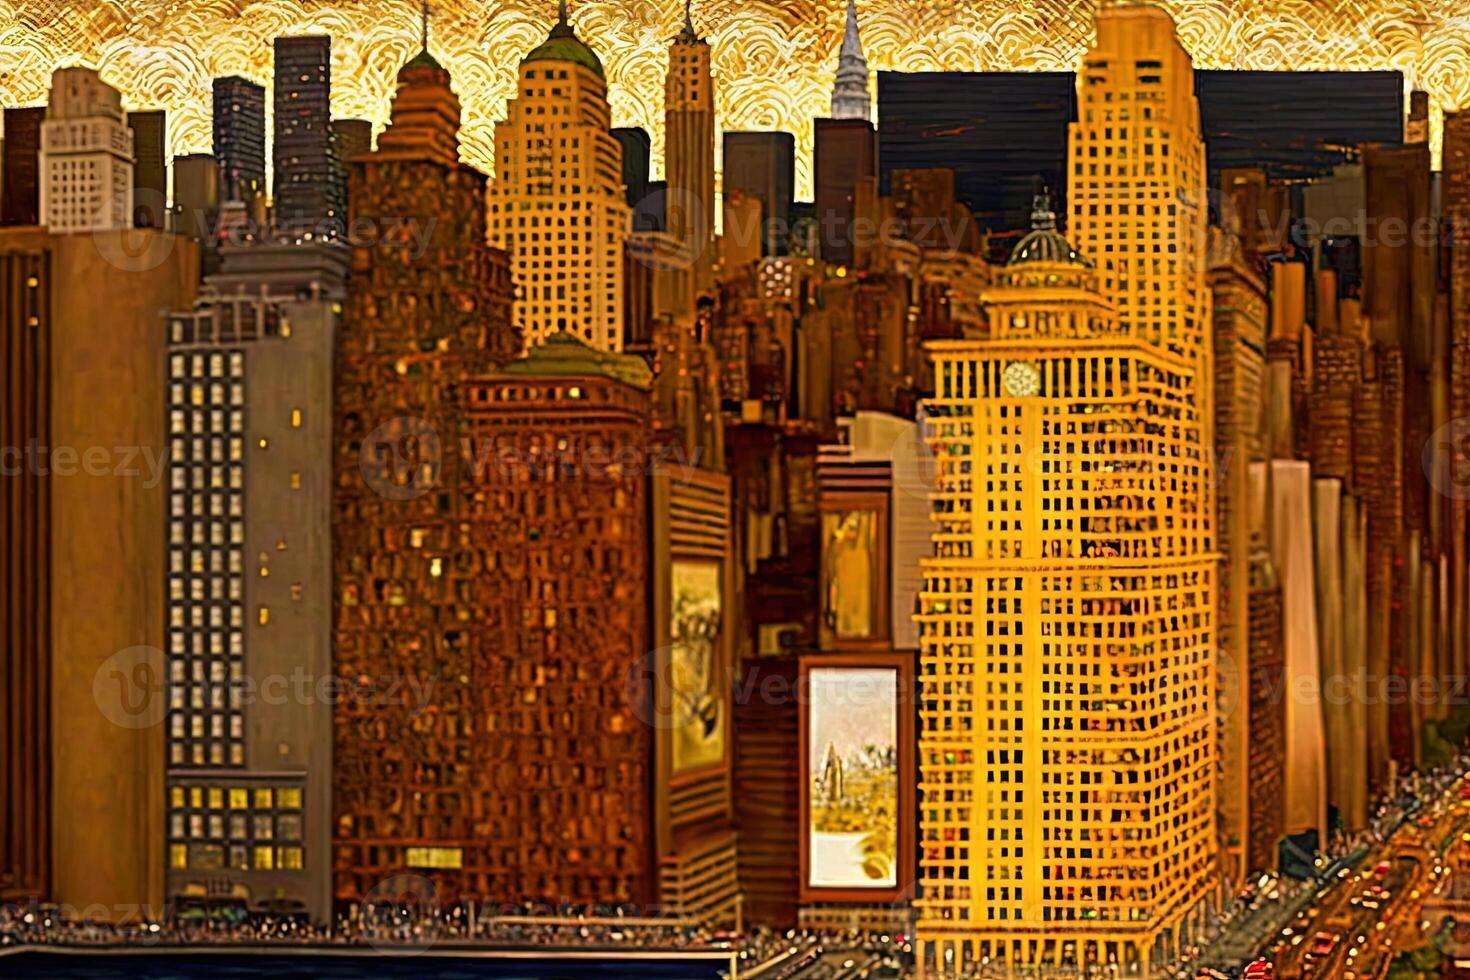 Gustav Klimt style imaginary representation new york city if painted by artist illustration photo